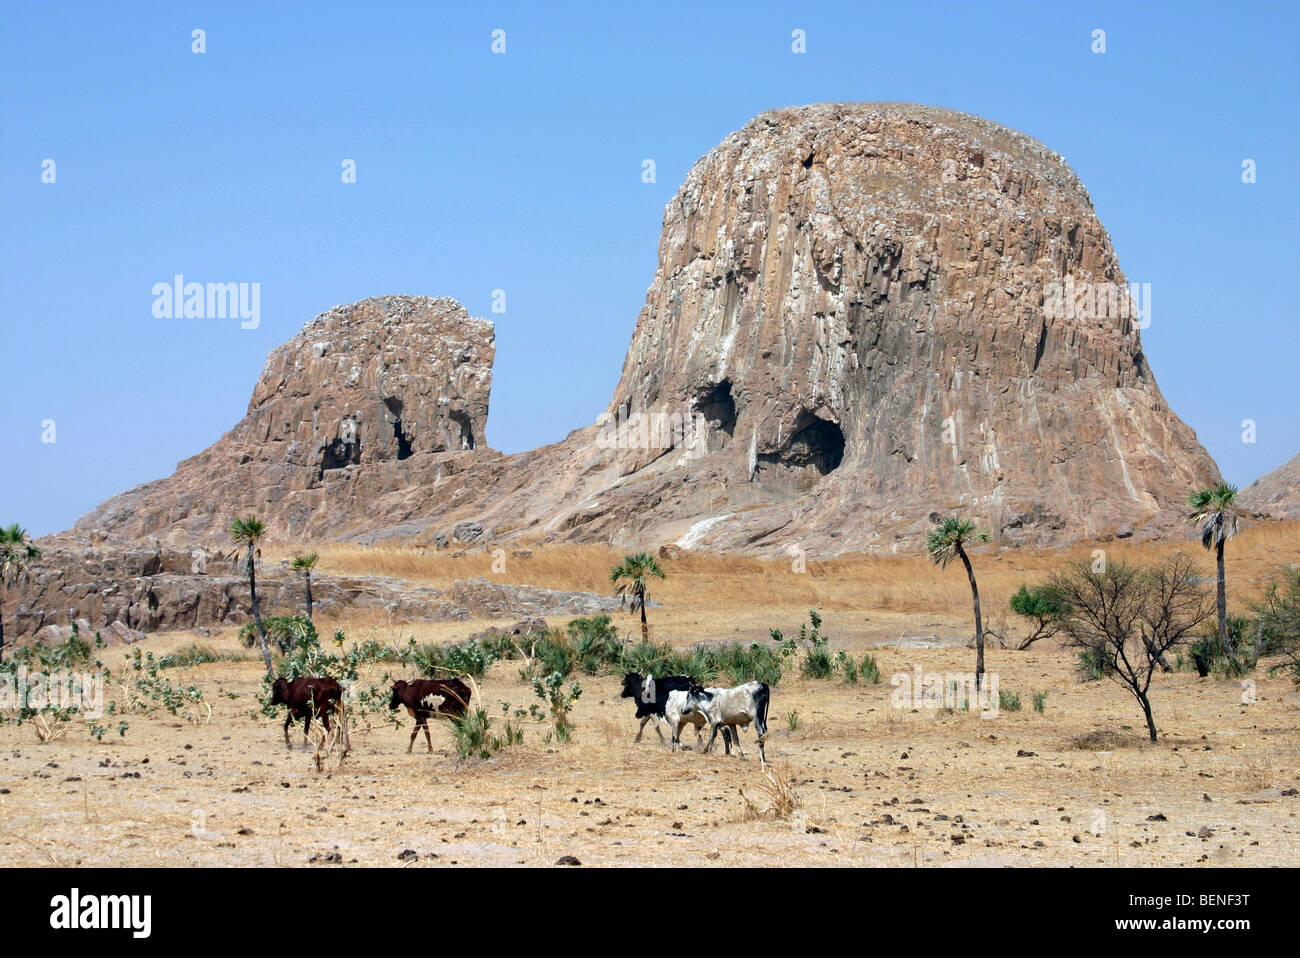 Volcanic eroded basalt rocks of Hadjer El Hamis / Rocher des Elephants / Elephant Rock near Douguia, Chad, Central Africa Stock Photo